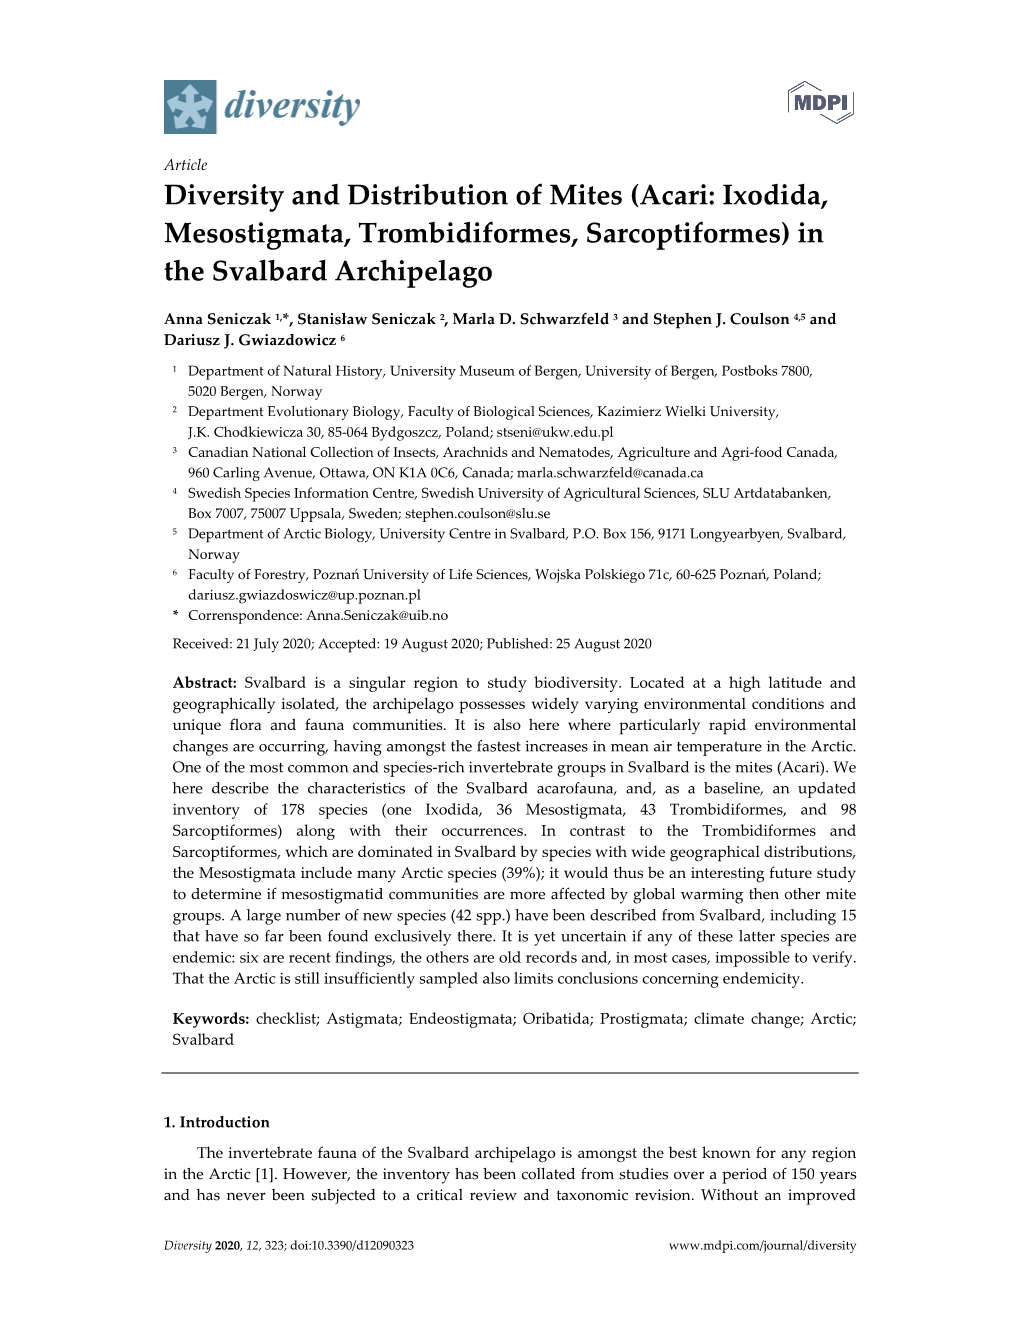 Diversity and Distribution of Mites (Acari: Ixodida, Mesostigmata, Trombidiformes, Sarcoptiformes) in the Svalbard Archipelago